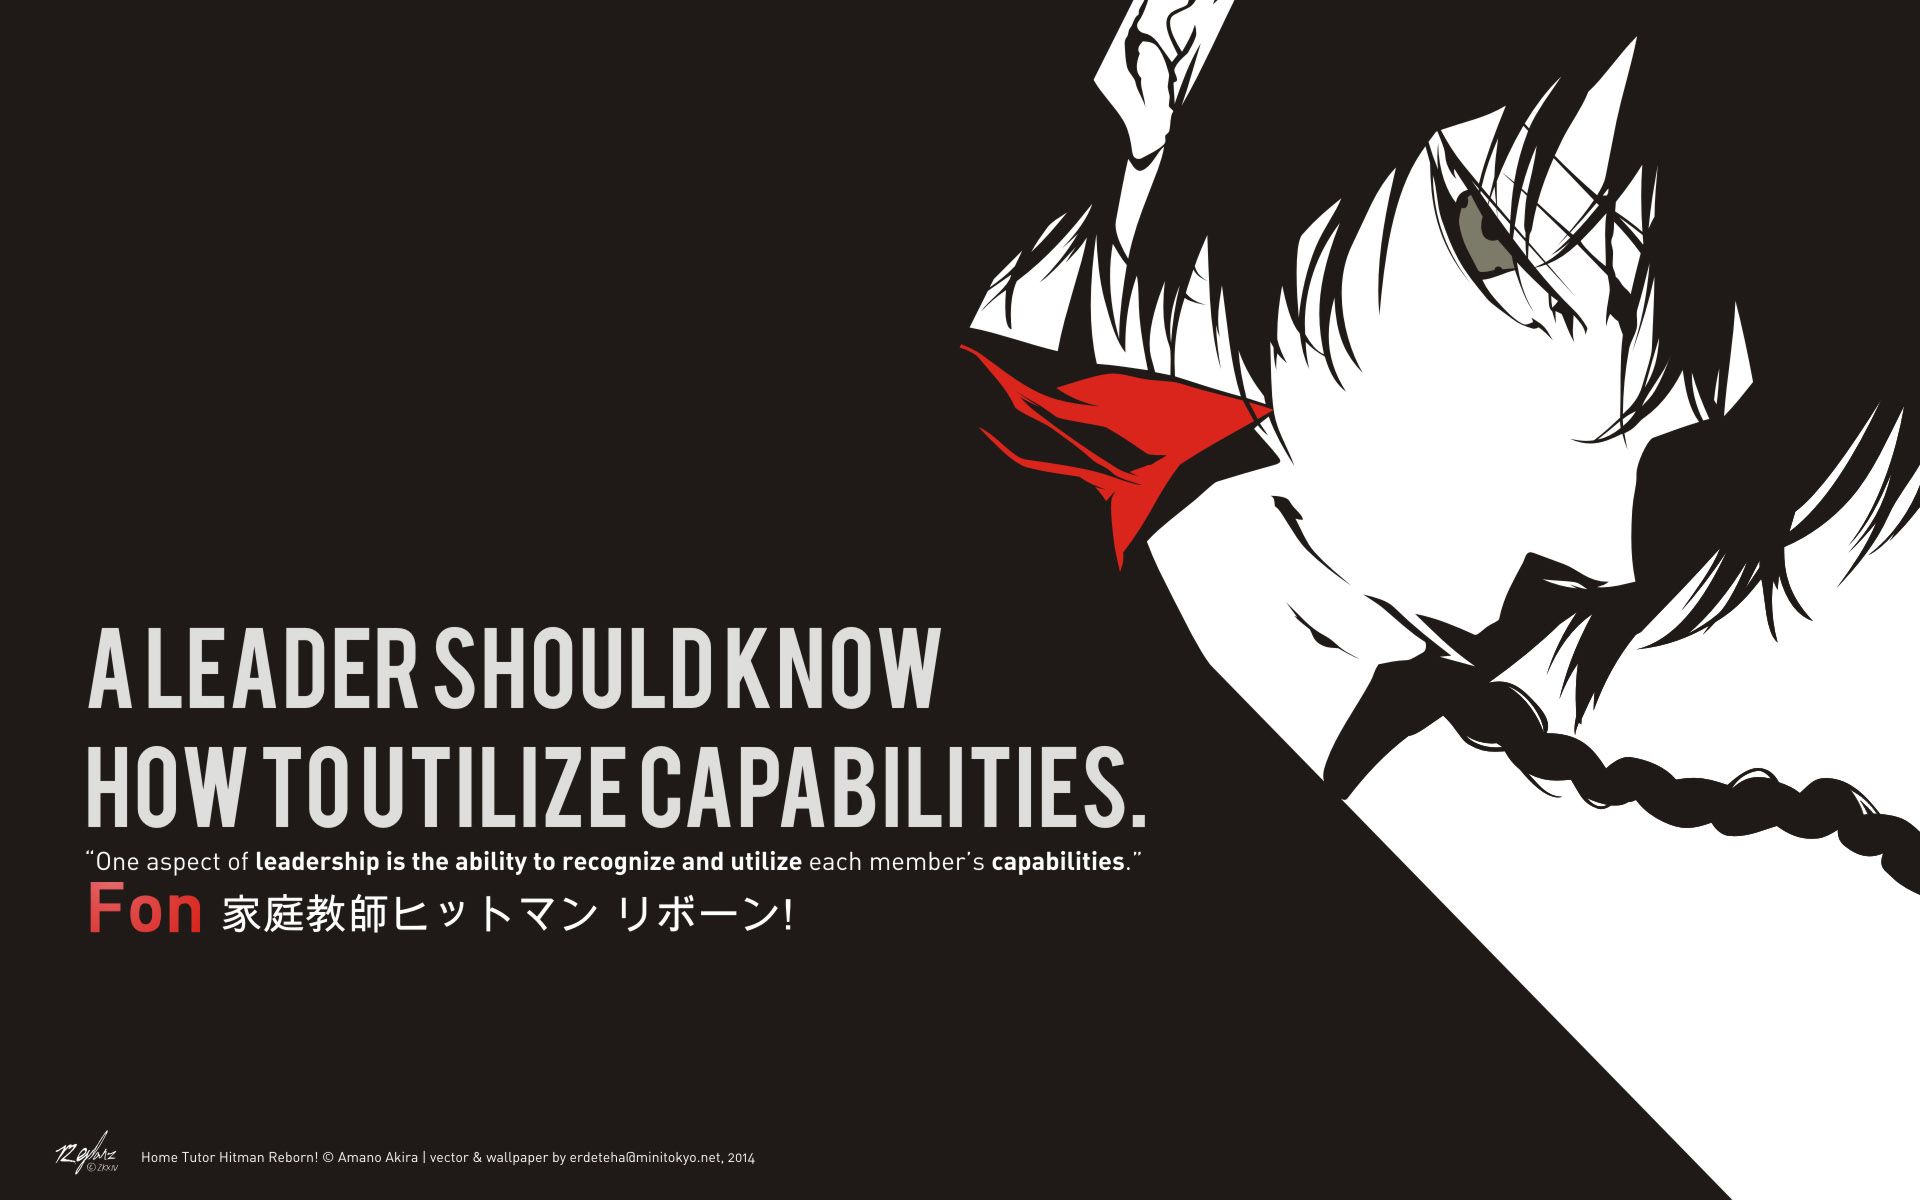 Katekyo Hitman Reborn! Wallpaper: Leader Should Know How to Utilize Capabilities